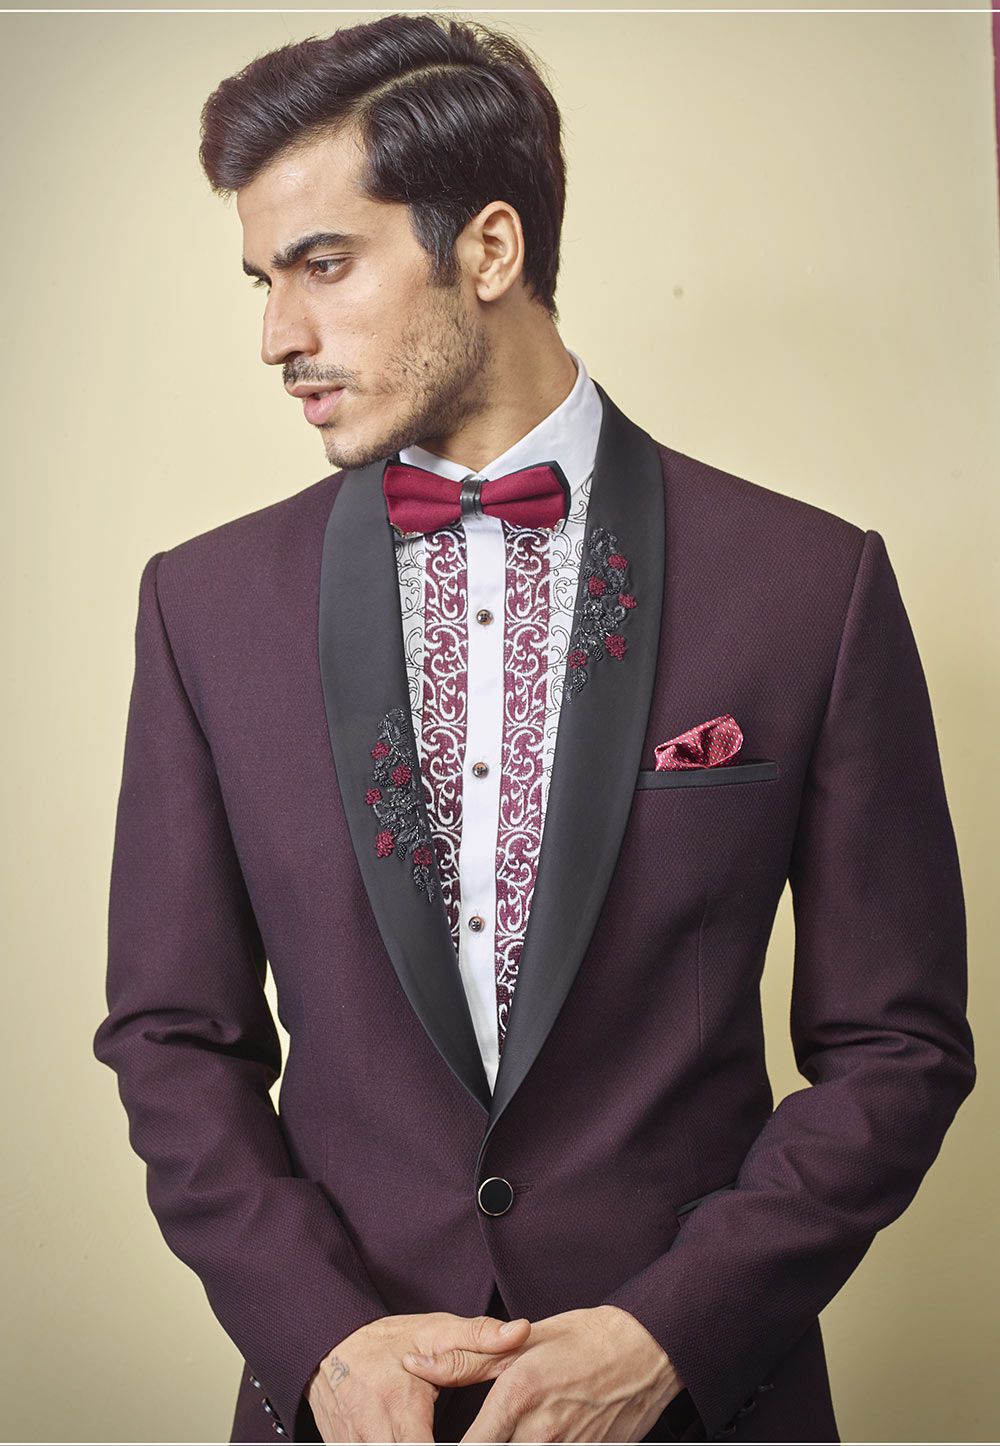 What colour suit should men wear at a wedding night party? - Quora